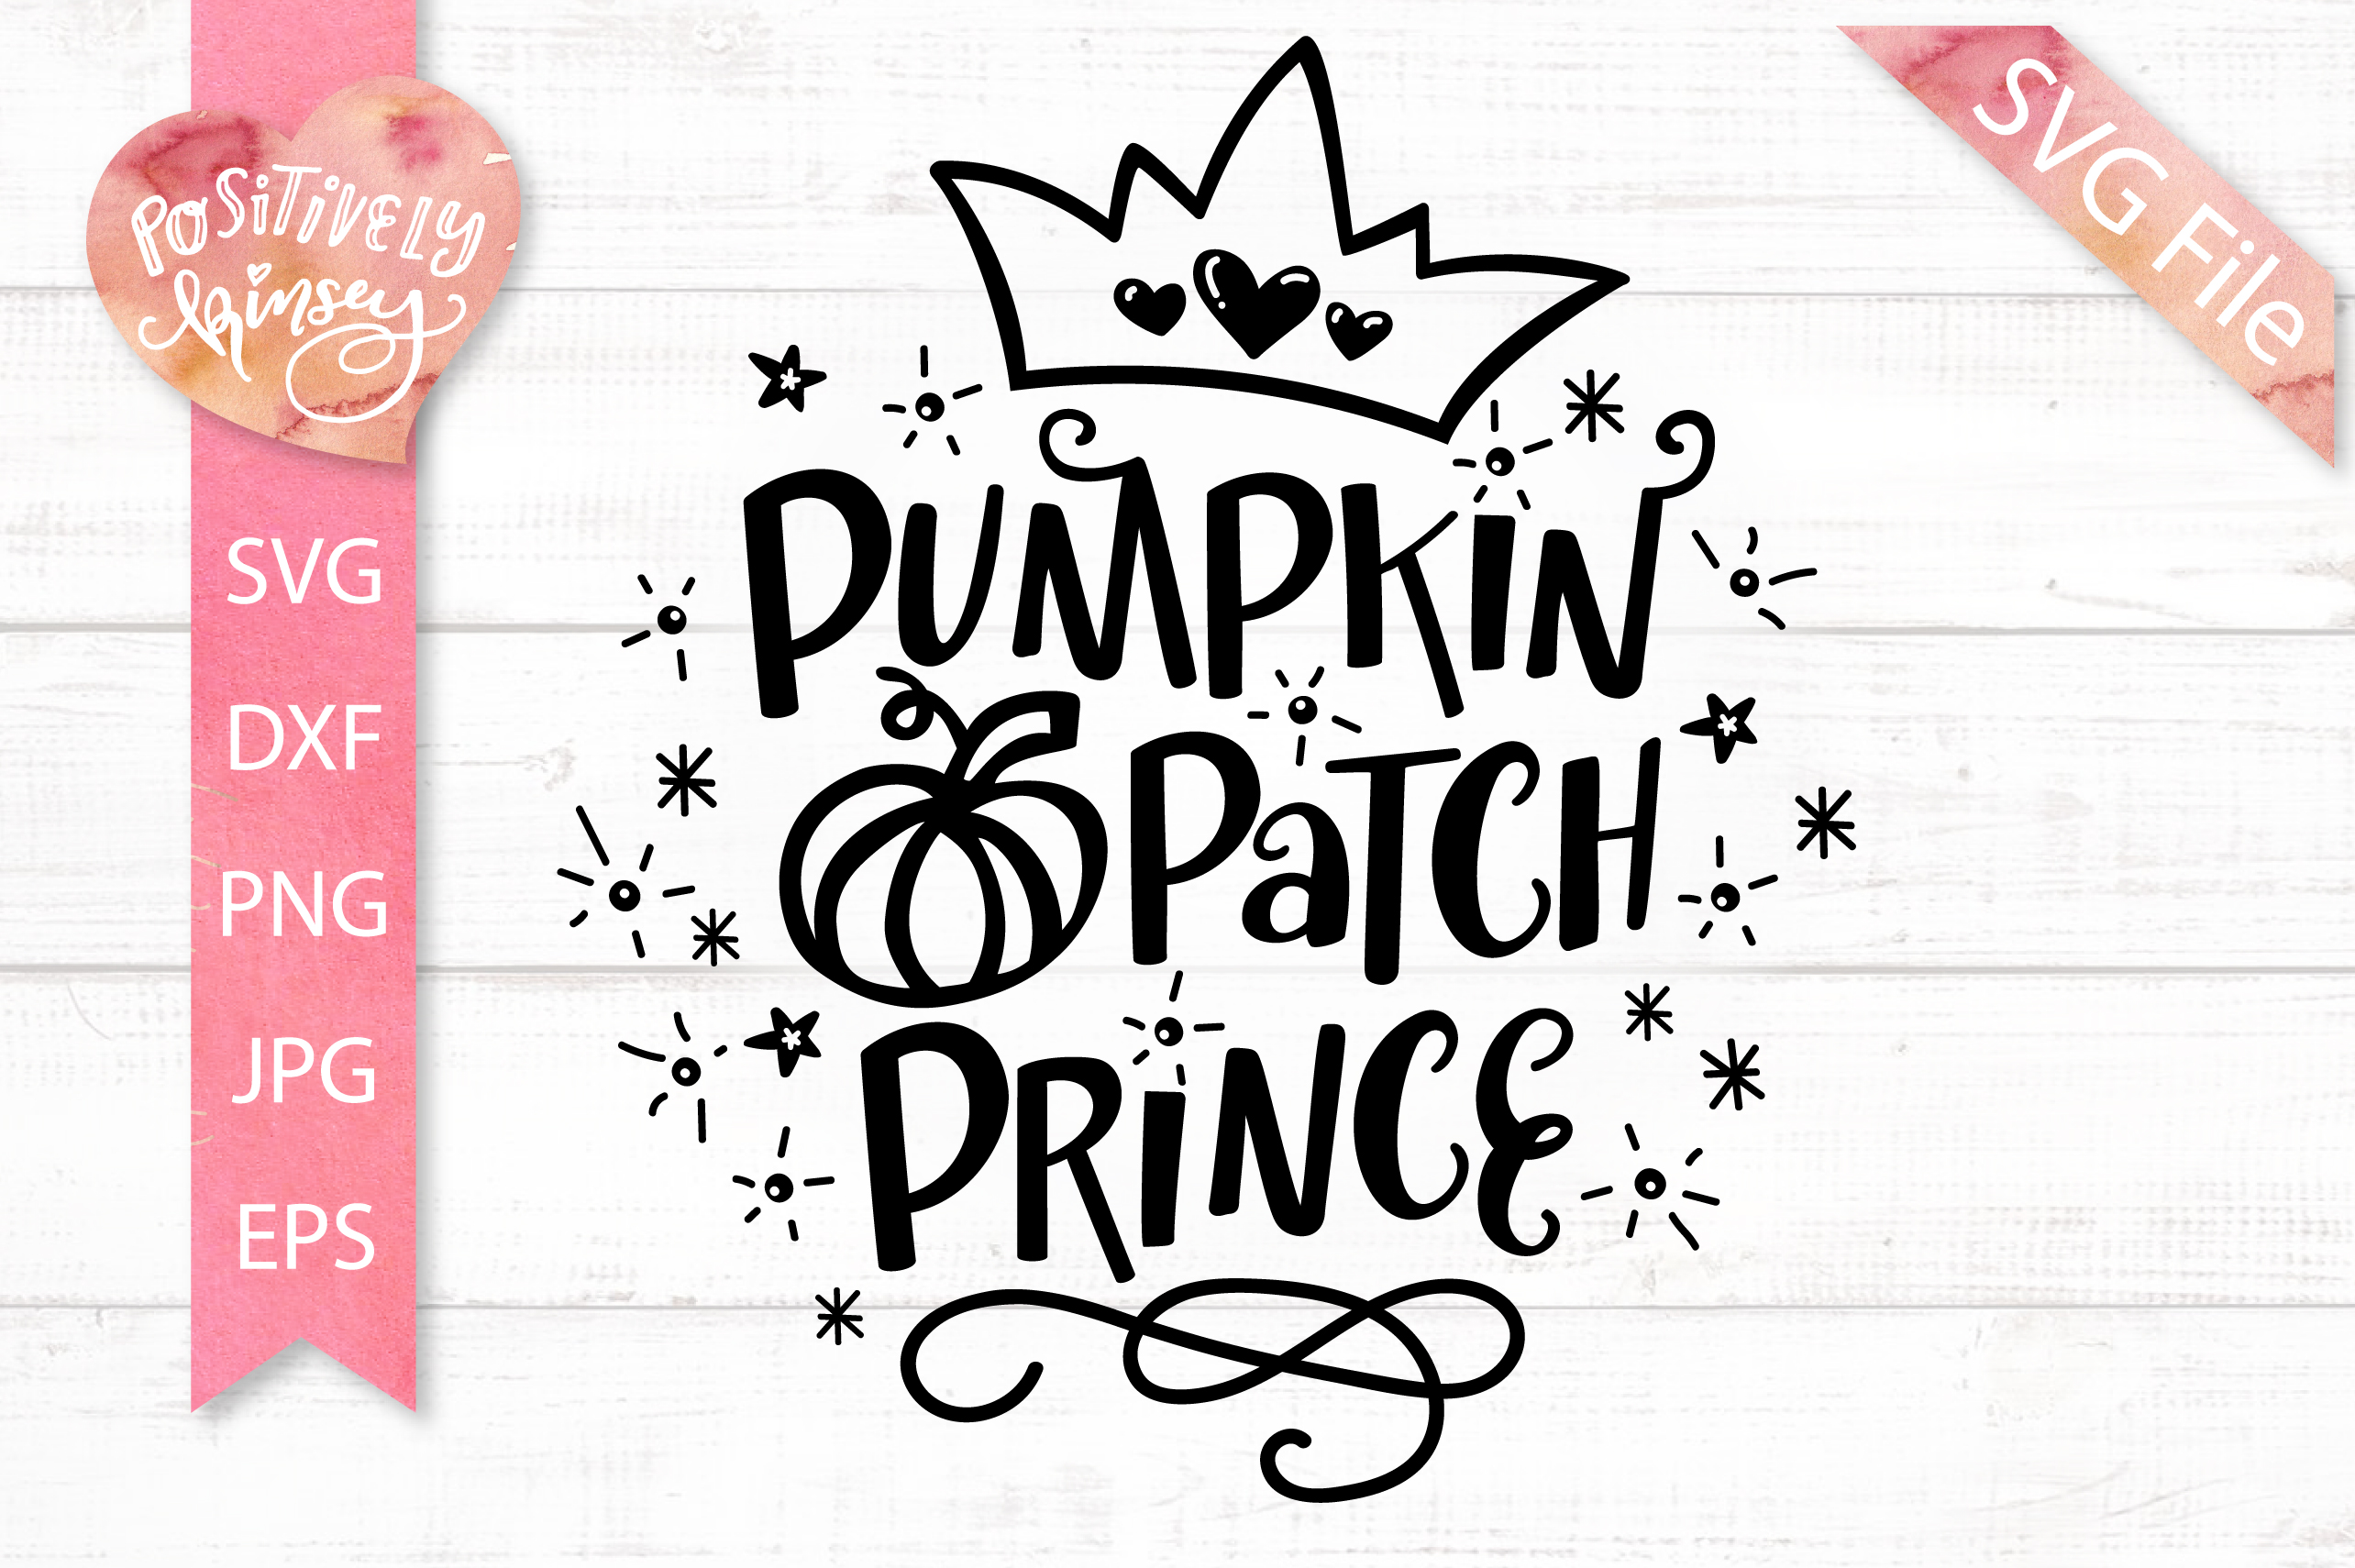 Pumpkin Patch Prince SVG DXF PNG EPS JPG Baby Boy SVG Files